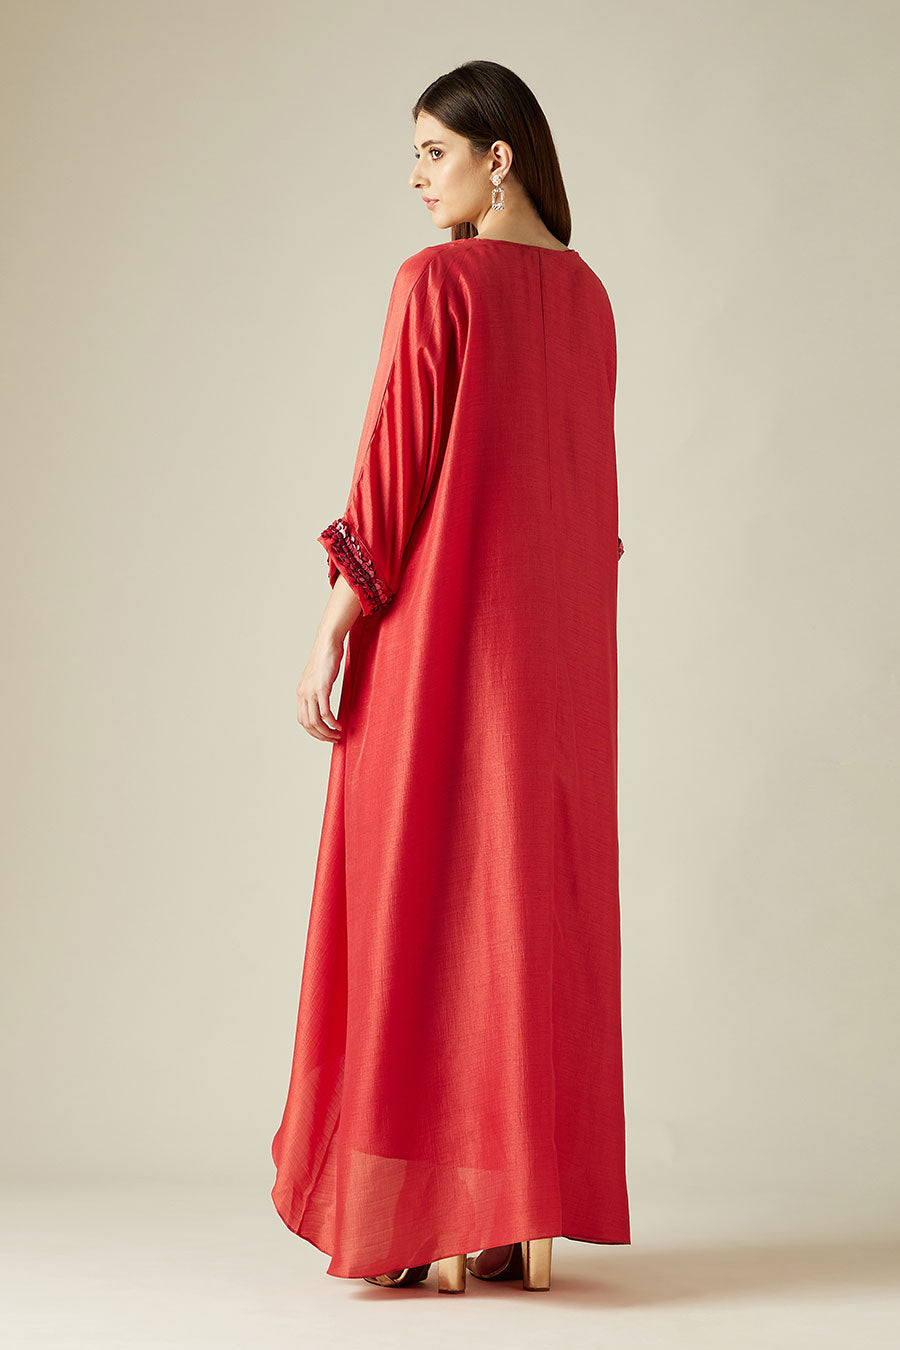 Scarlet Red Drape Dress & Cape Set